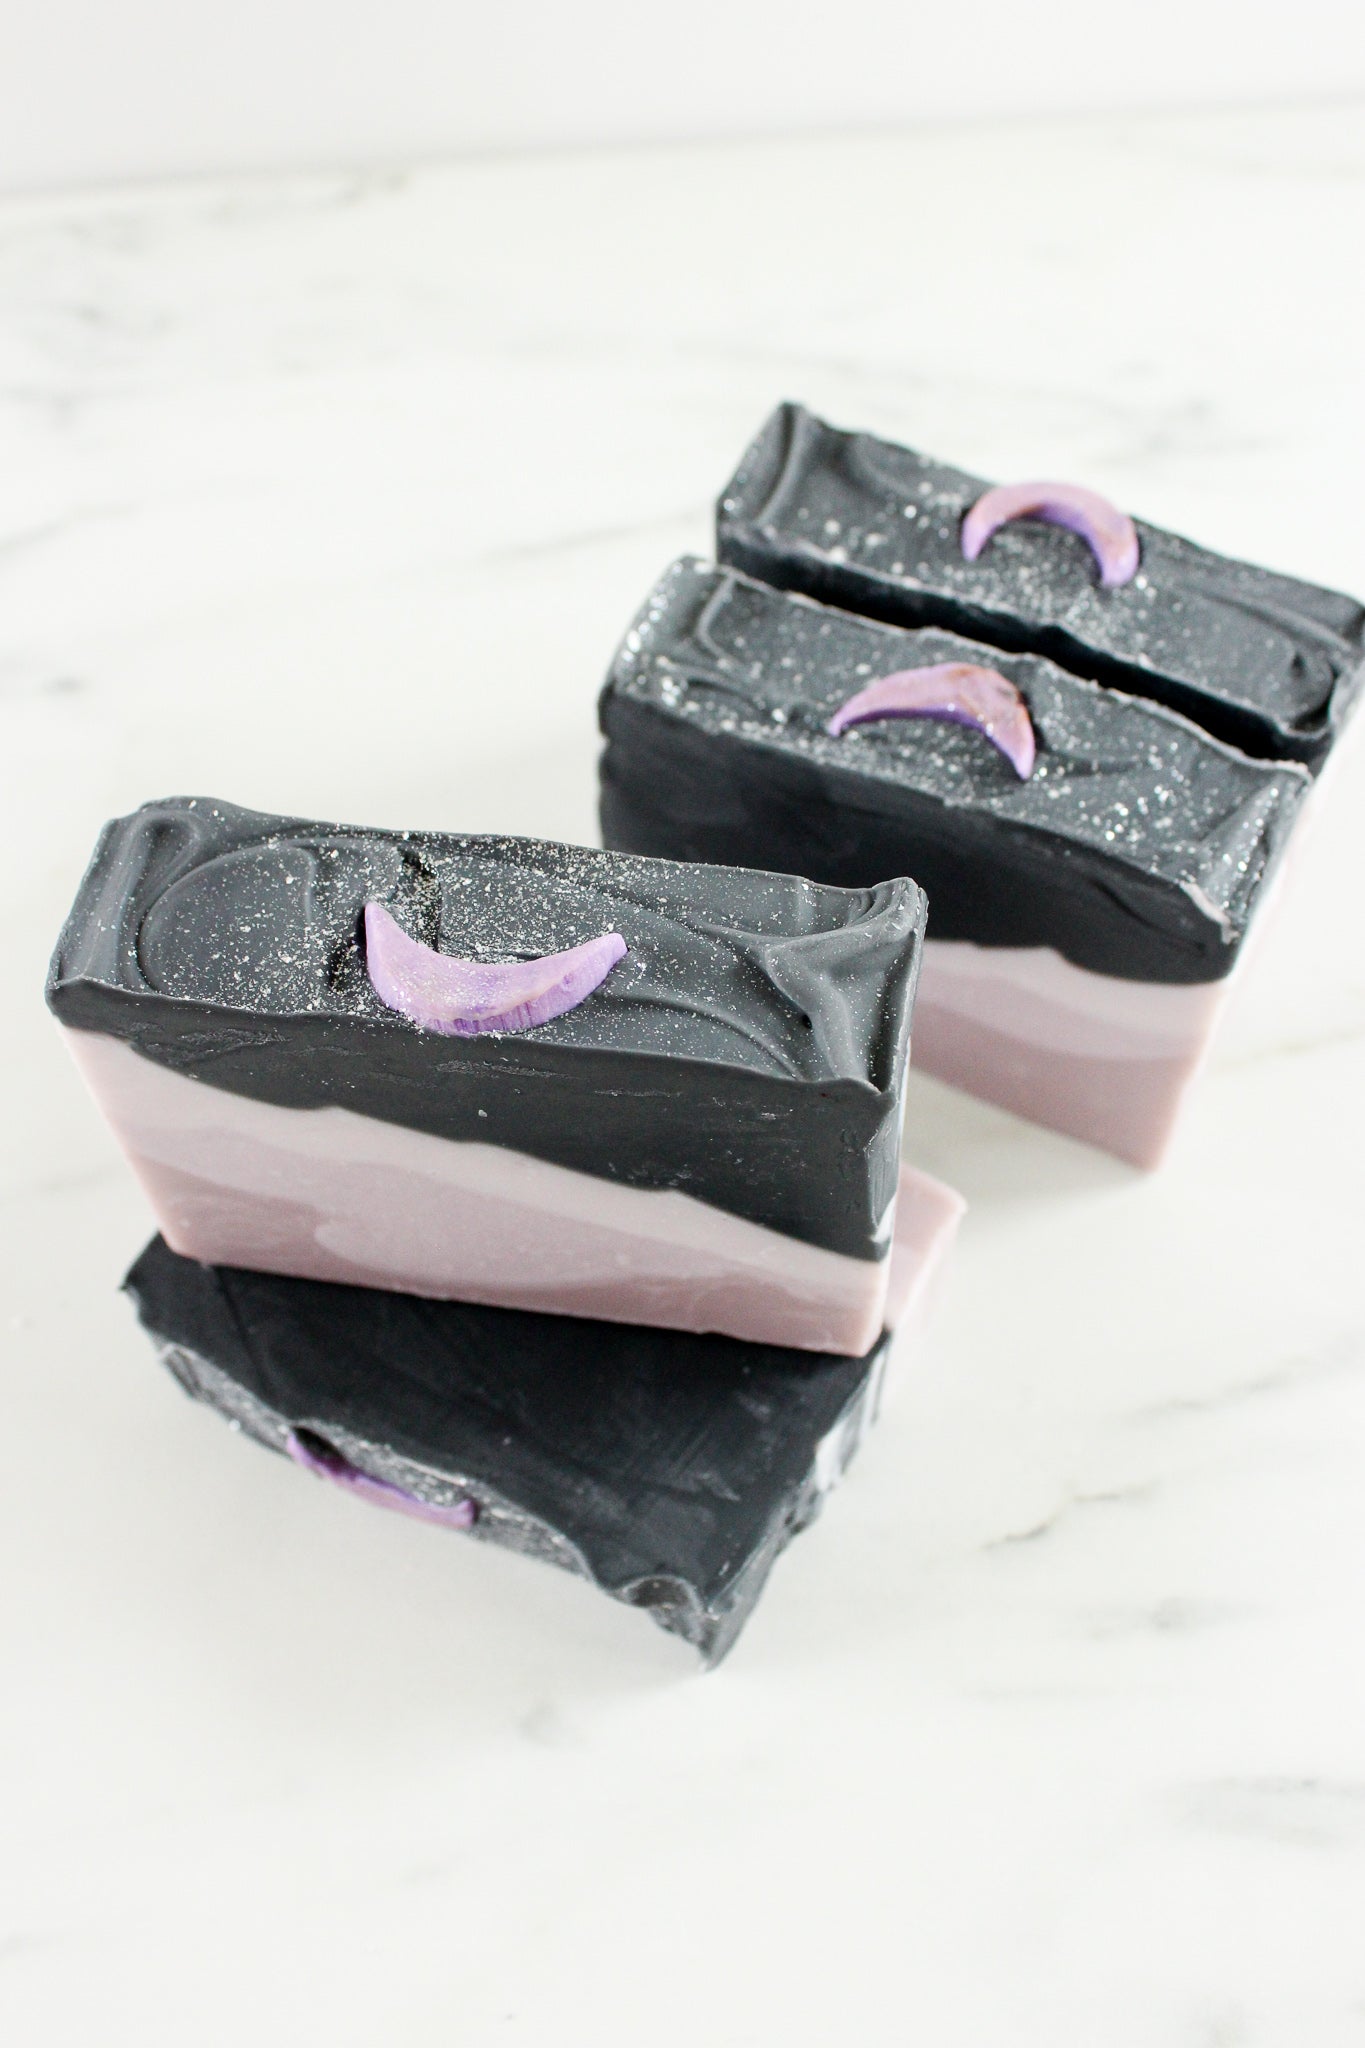 Lavender Eclipse Handcrafted Soap Bar